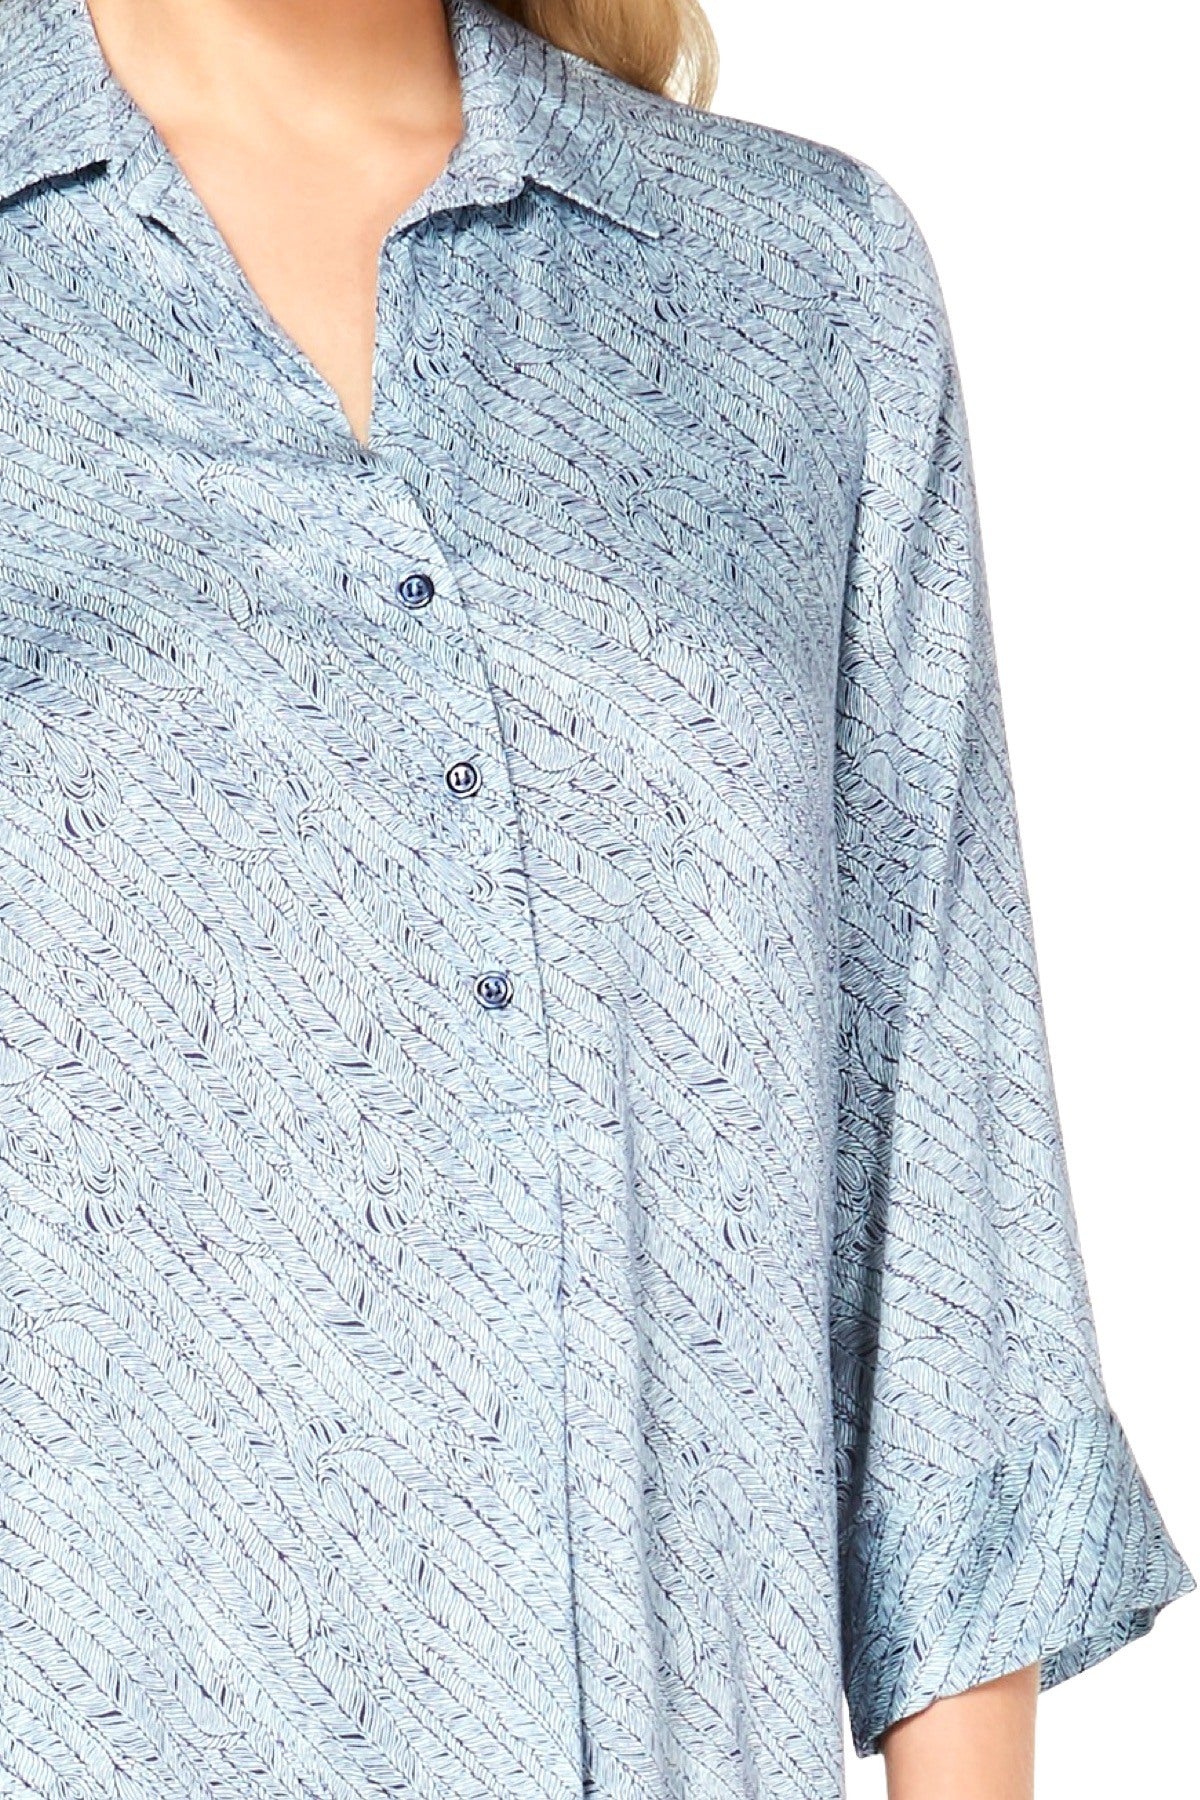 Sesoire Blue Feather Printed Sleepshirt Nightgown